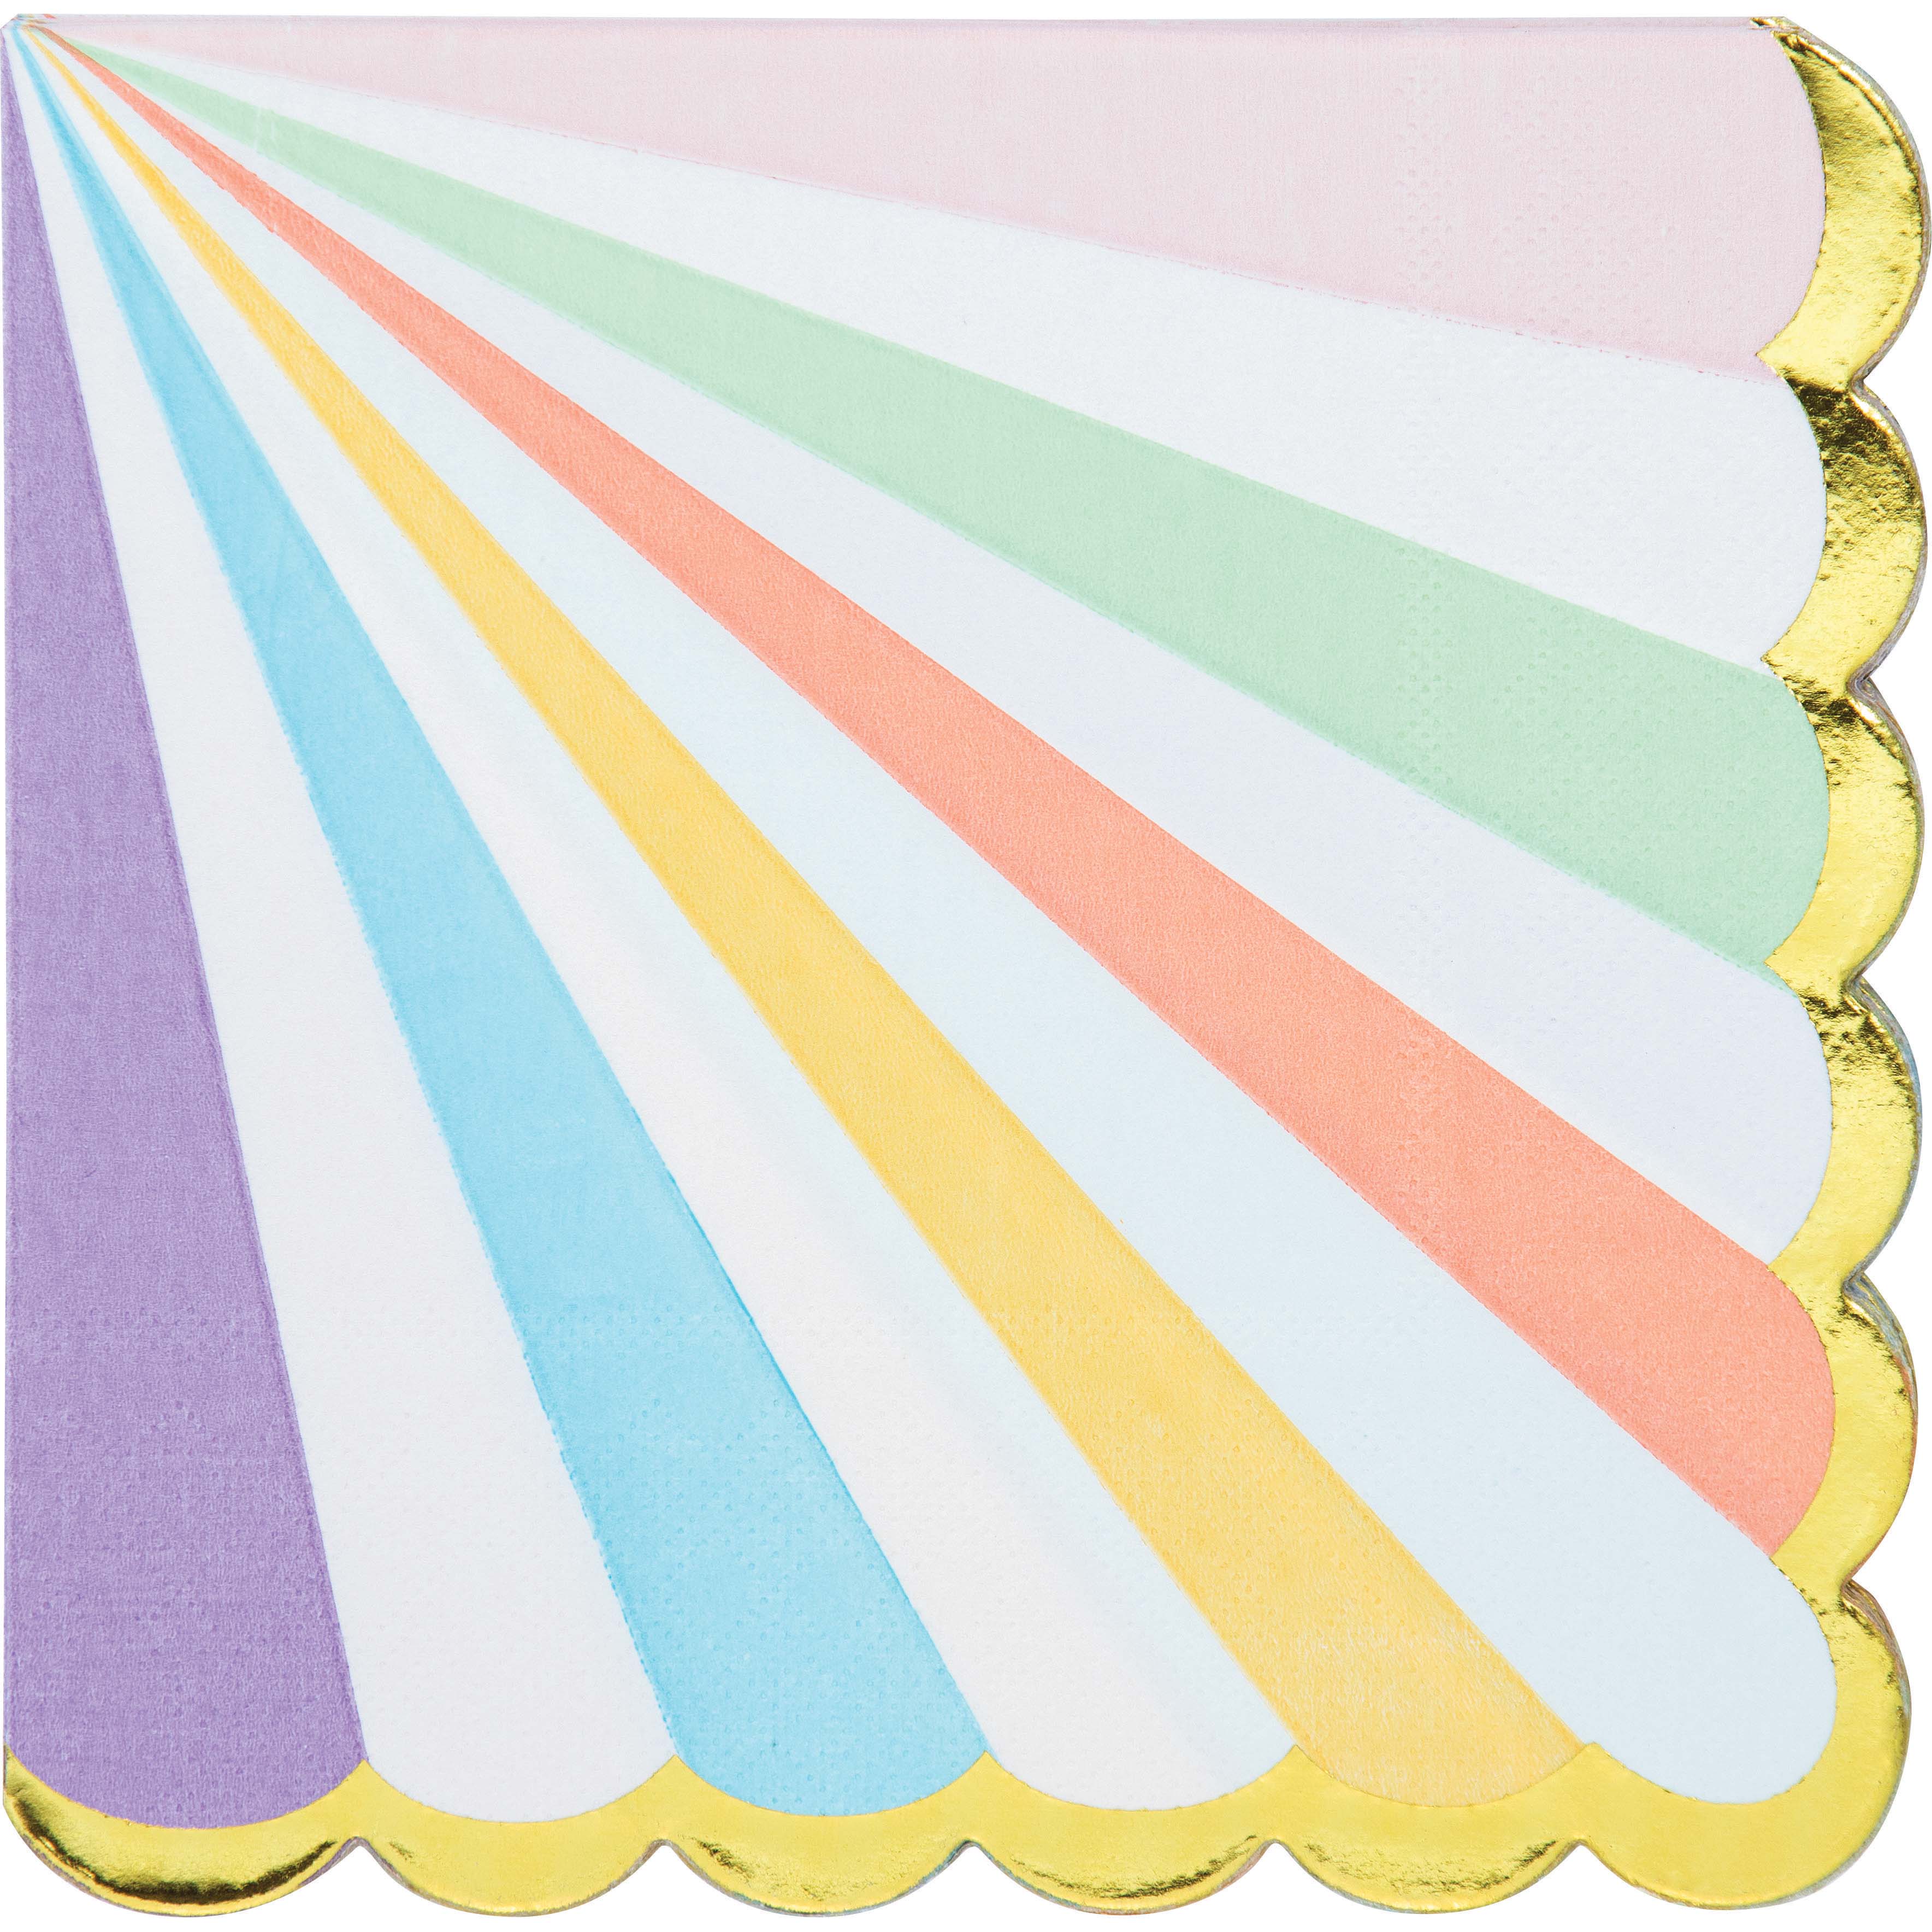 Festive napkin in pastel colors 16 pcs